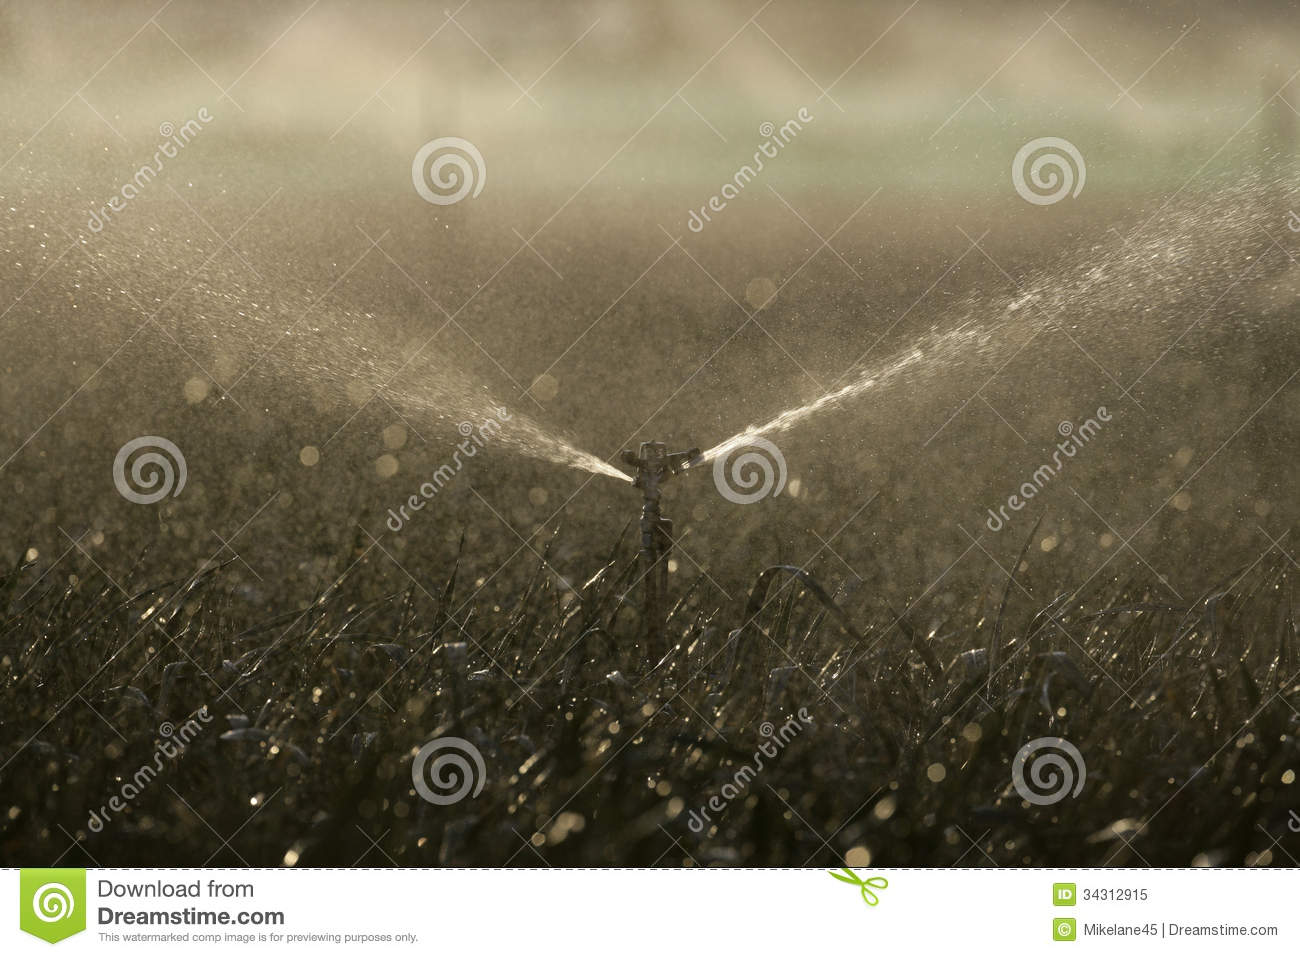 Water Sprinklers On Crops Royalty Free Stock Photo   Image  34312915